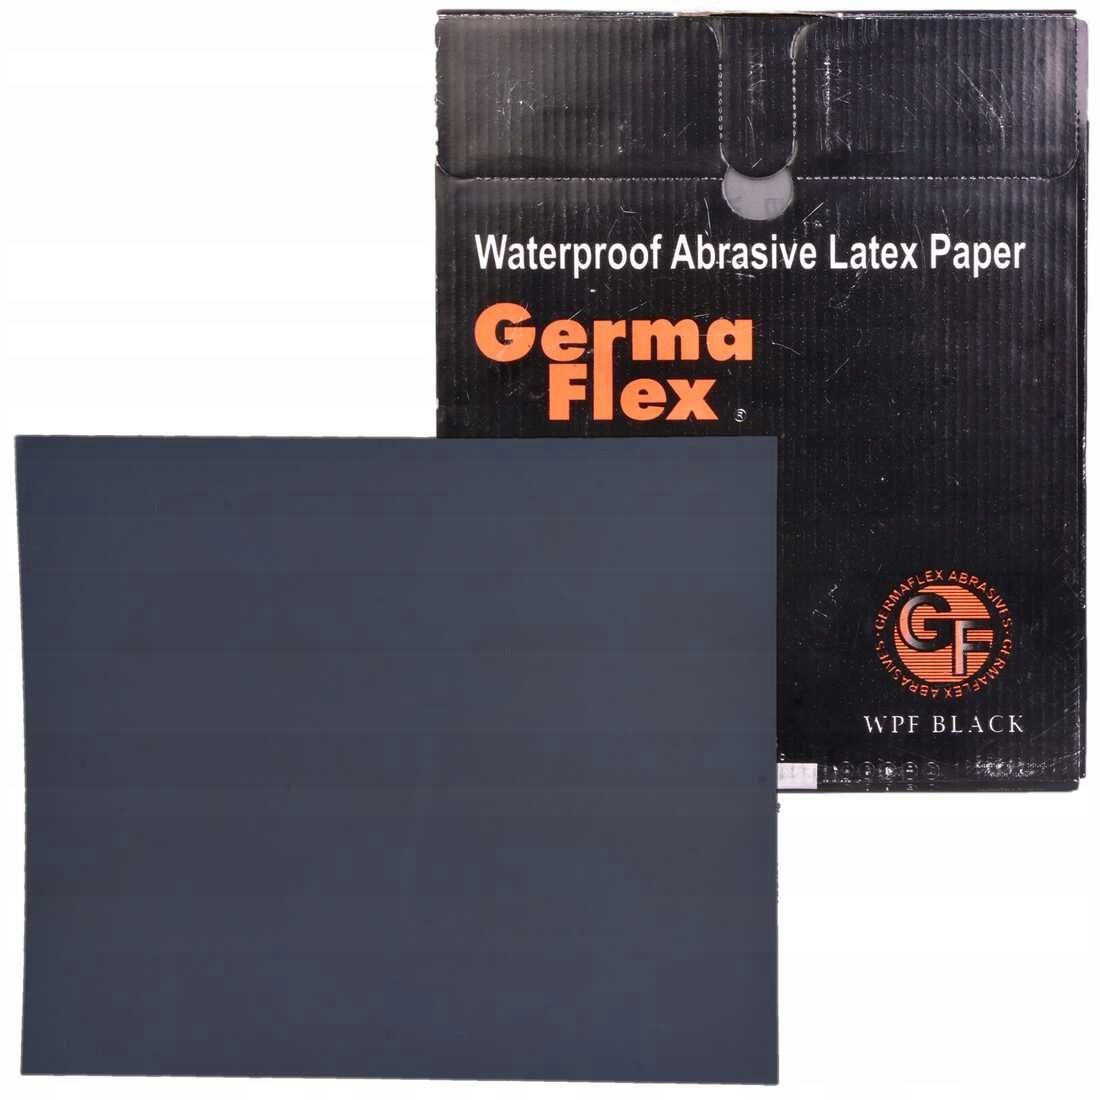 

Germa Flex Papier ścierny wodoodporny gr. 60